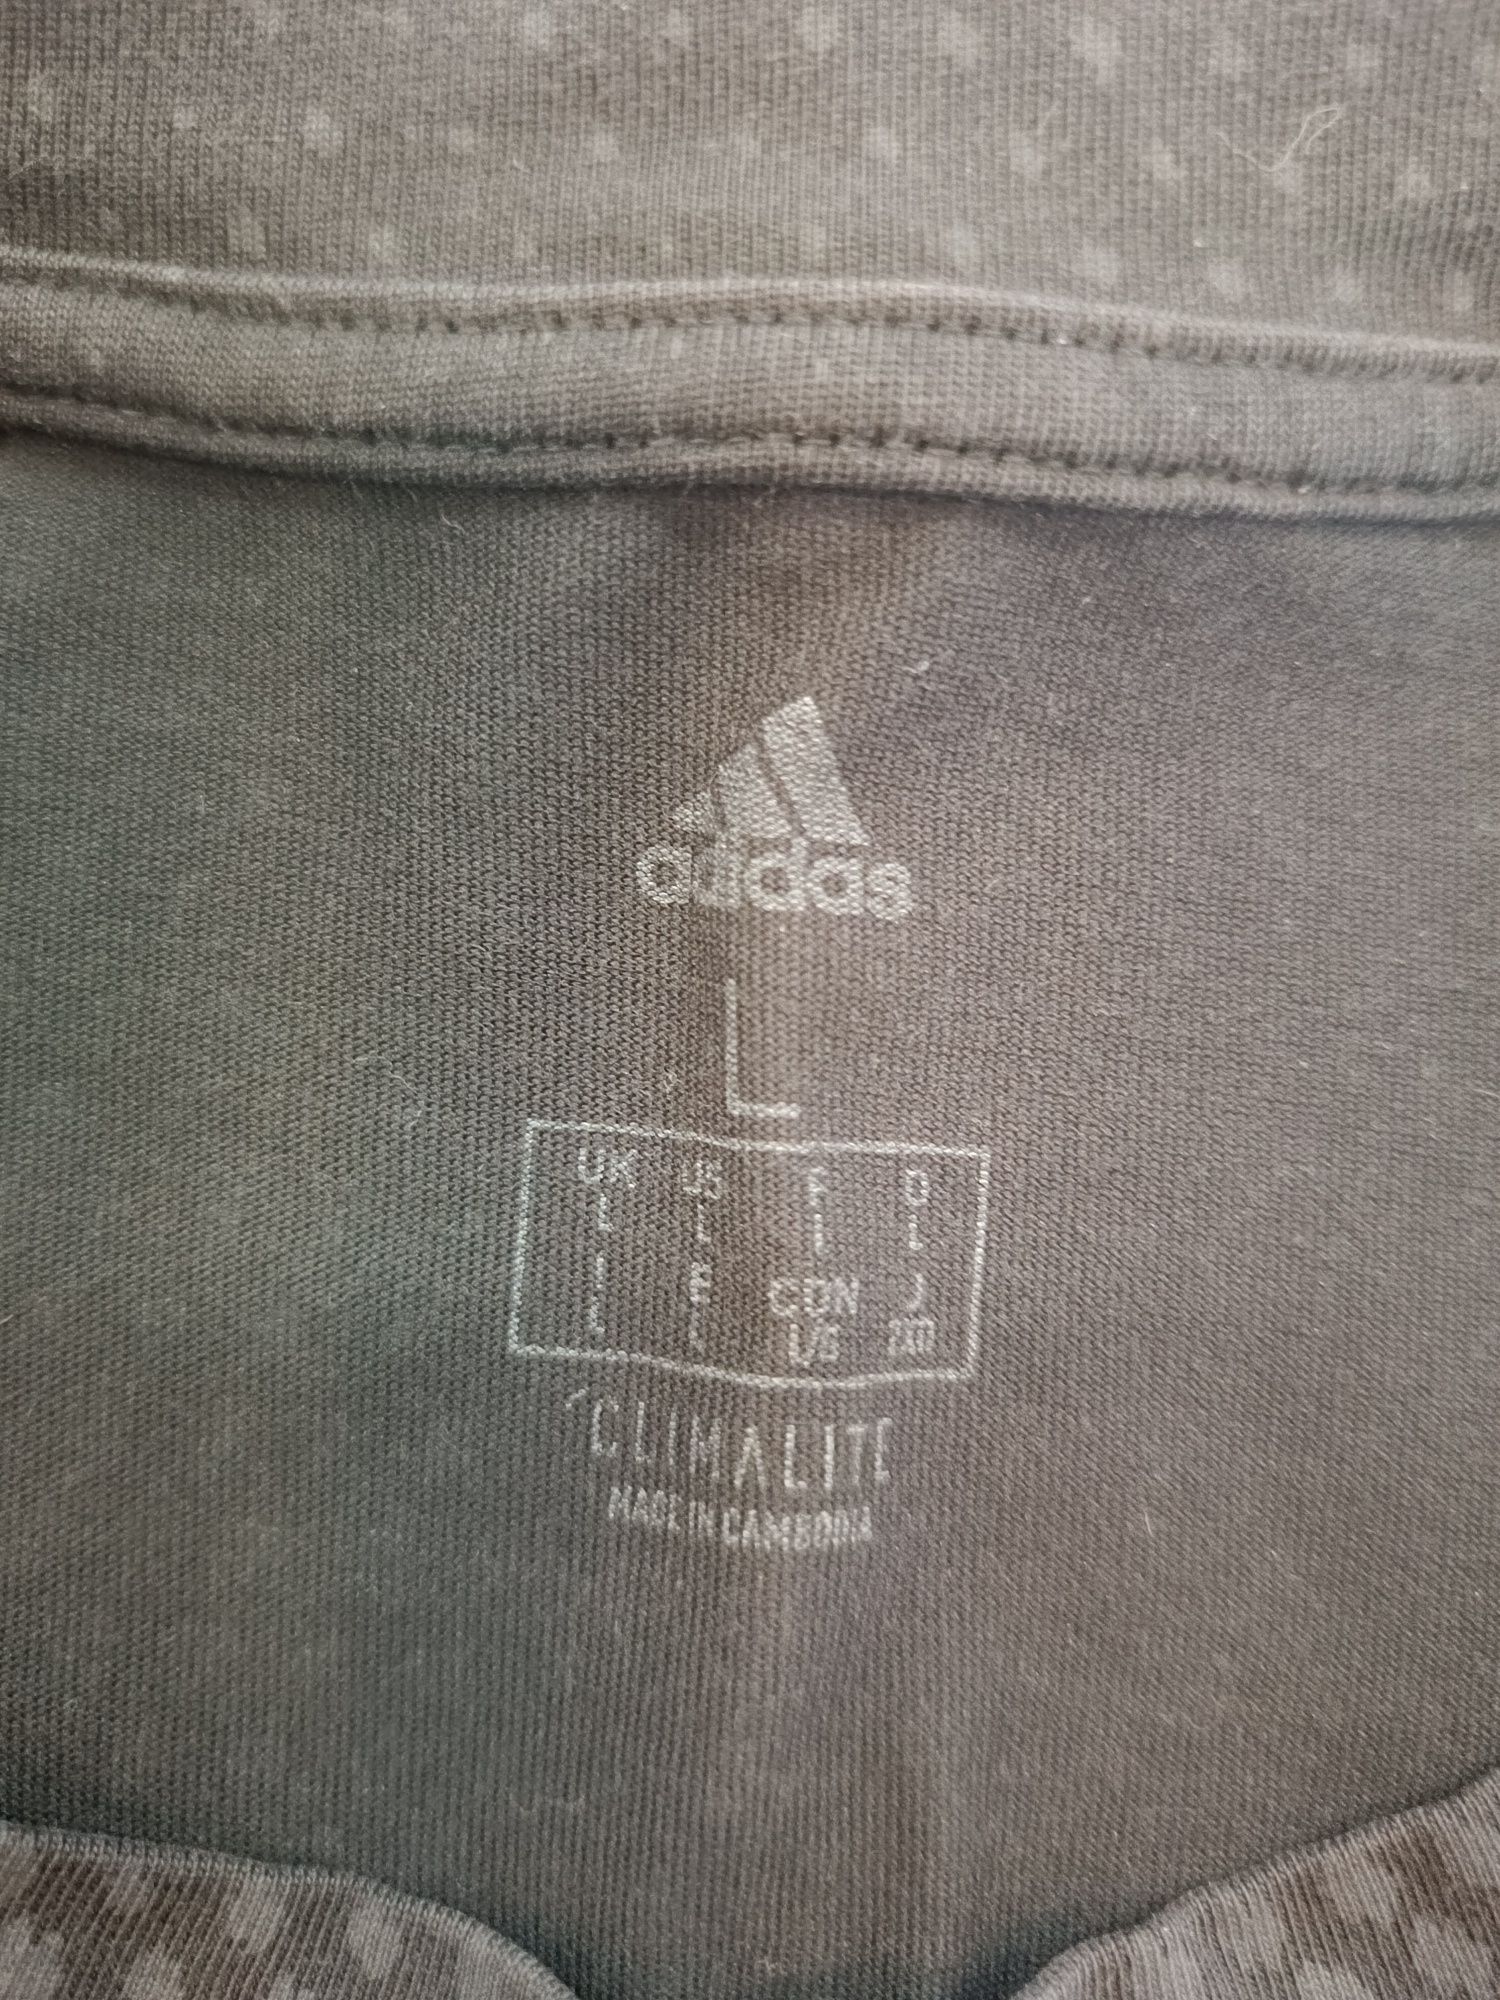 Koszulka Adidas rozmiar L czarna / ciemna